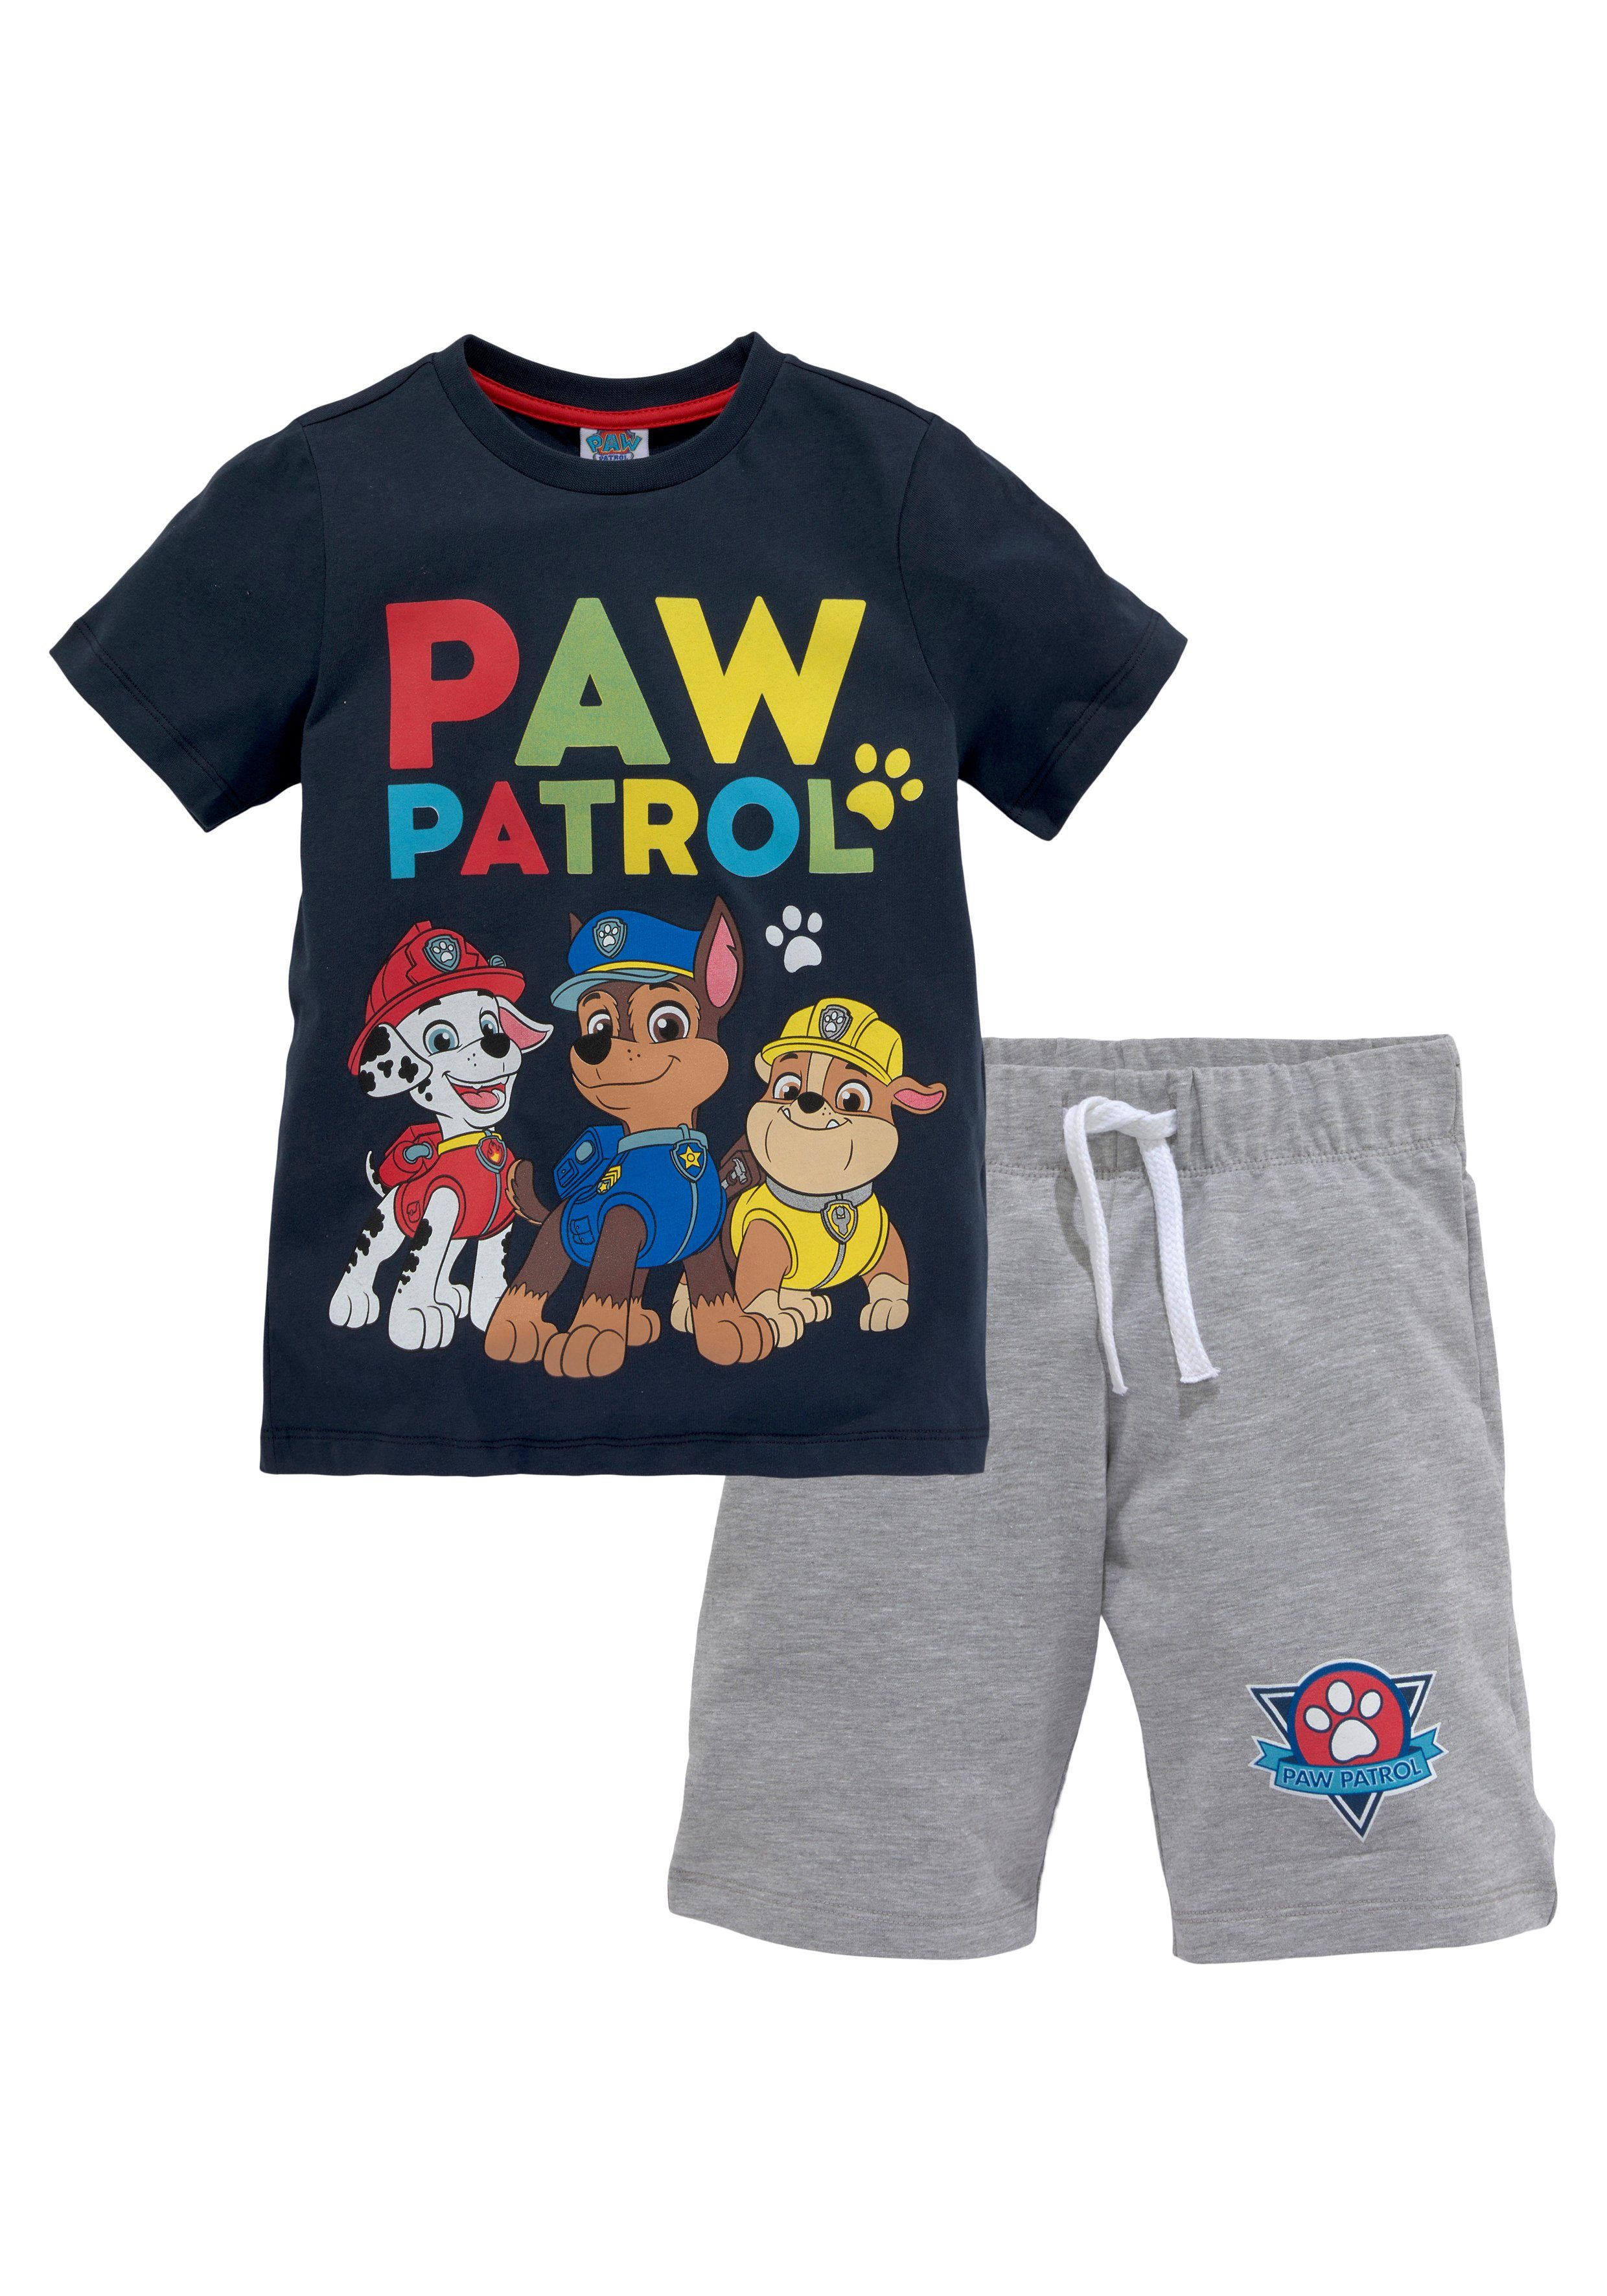 Heißer Verkauf PAW & (Set, Bermudas navy/grey PATROL T-Shirt 2-tlg)